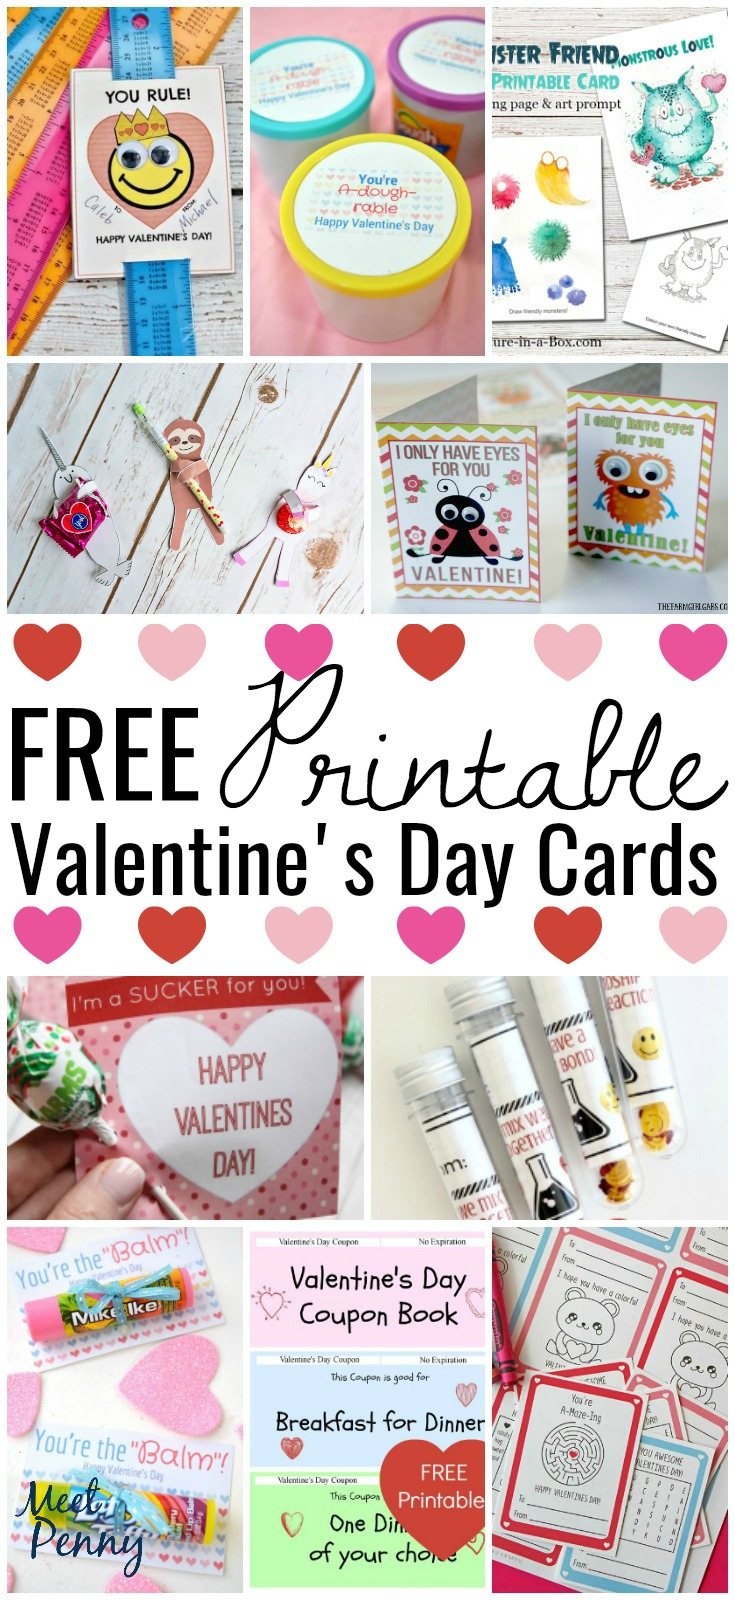 Free Printable Valentines Cards - Meet Penny - Free Printable School Valentines Cards